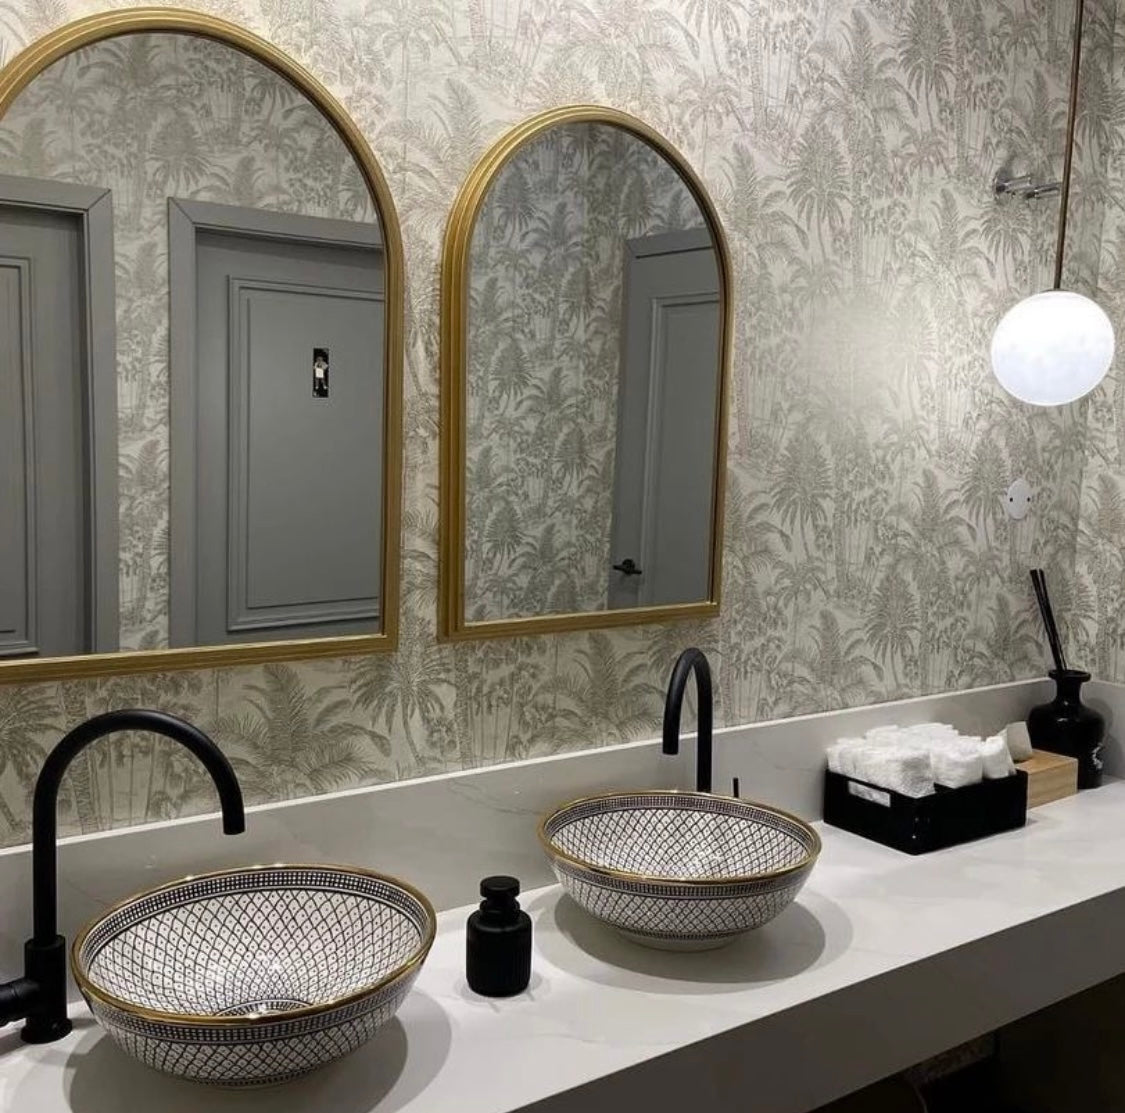 Golden sink 14k karat - bathroom sink - moroccan sink - Handmade ceramic sink - bathroom washbasin #20B